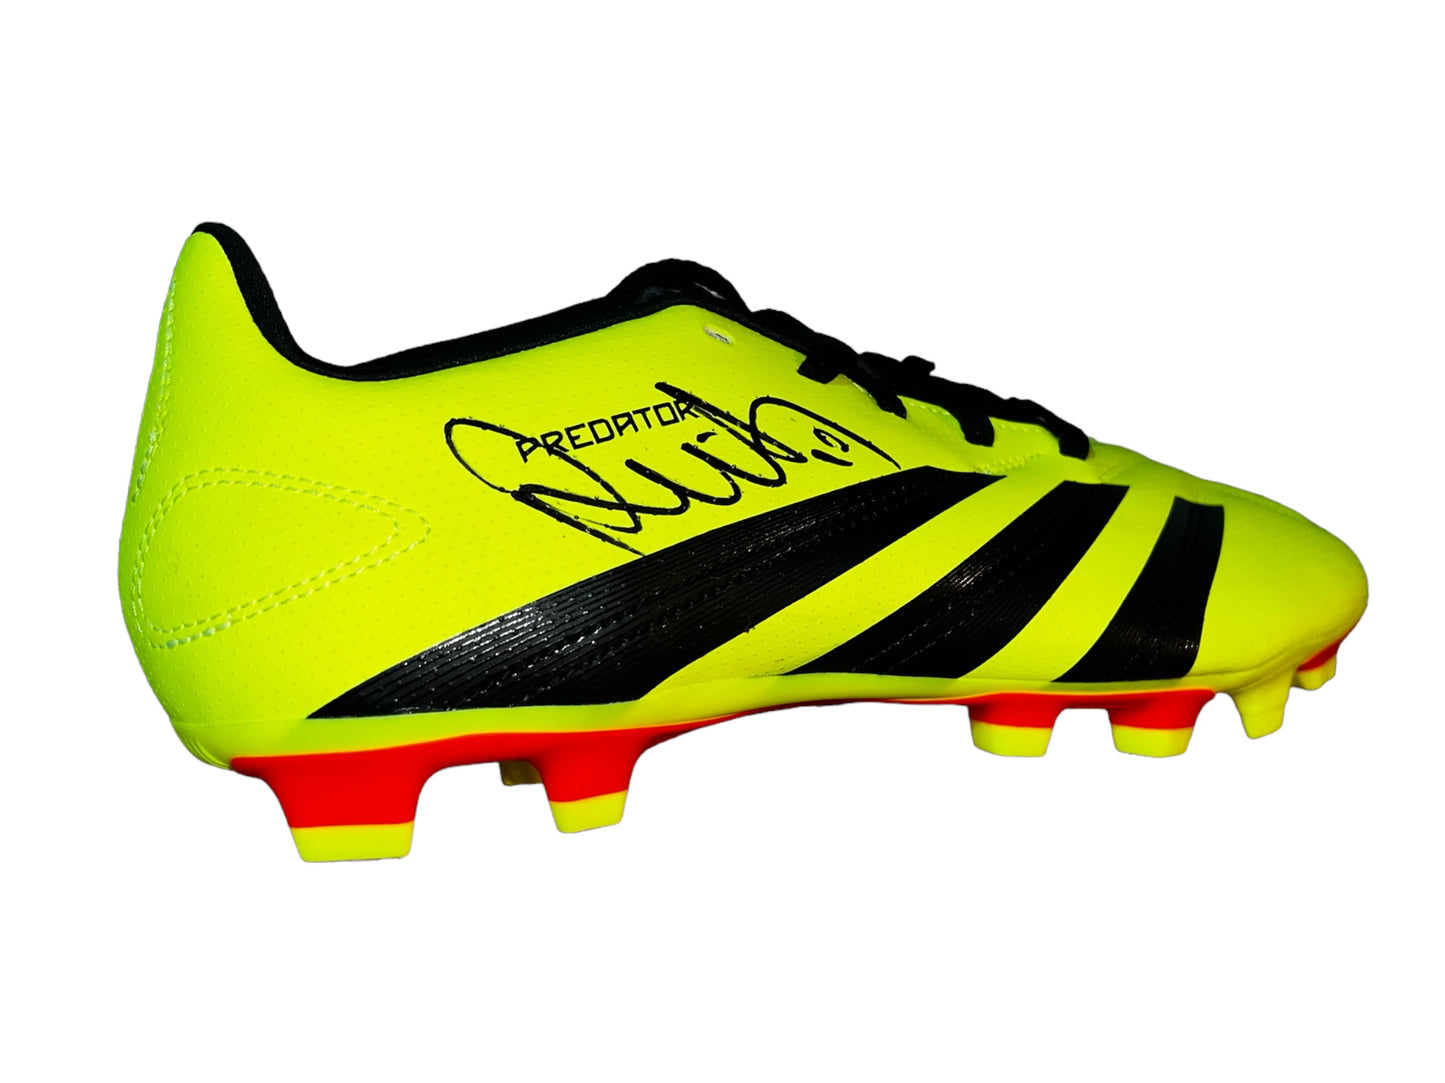 Rui Costa Signed Adidas Football Boot